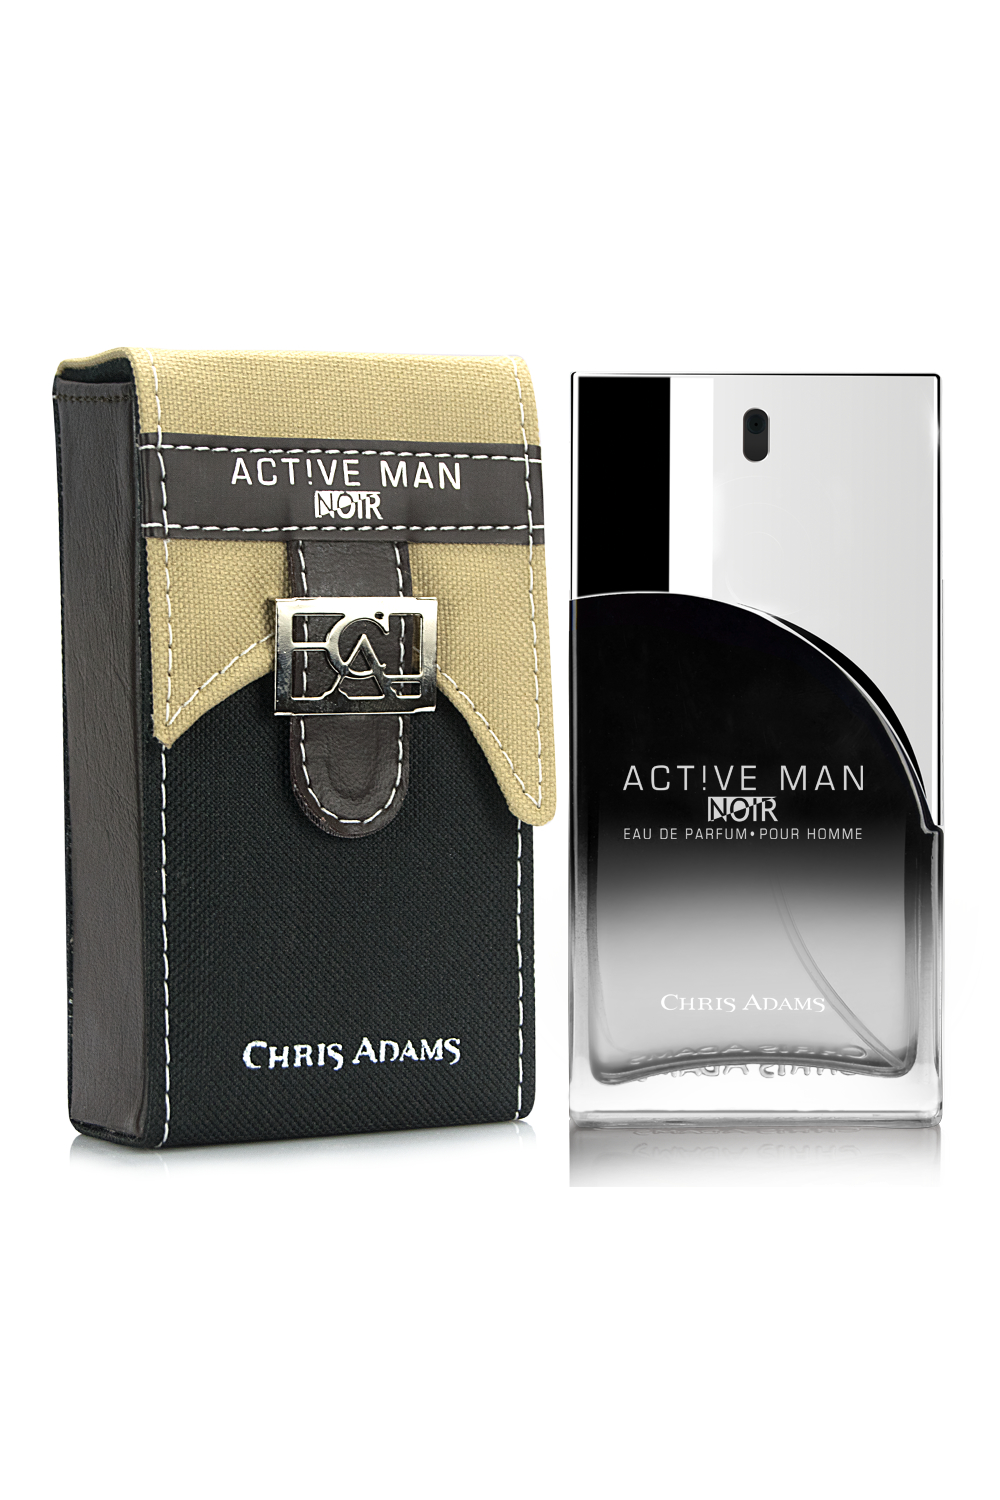 Chris Adams Active Man Noir edp